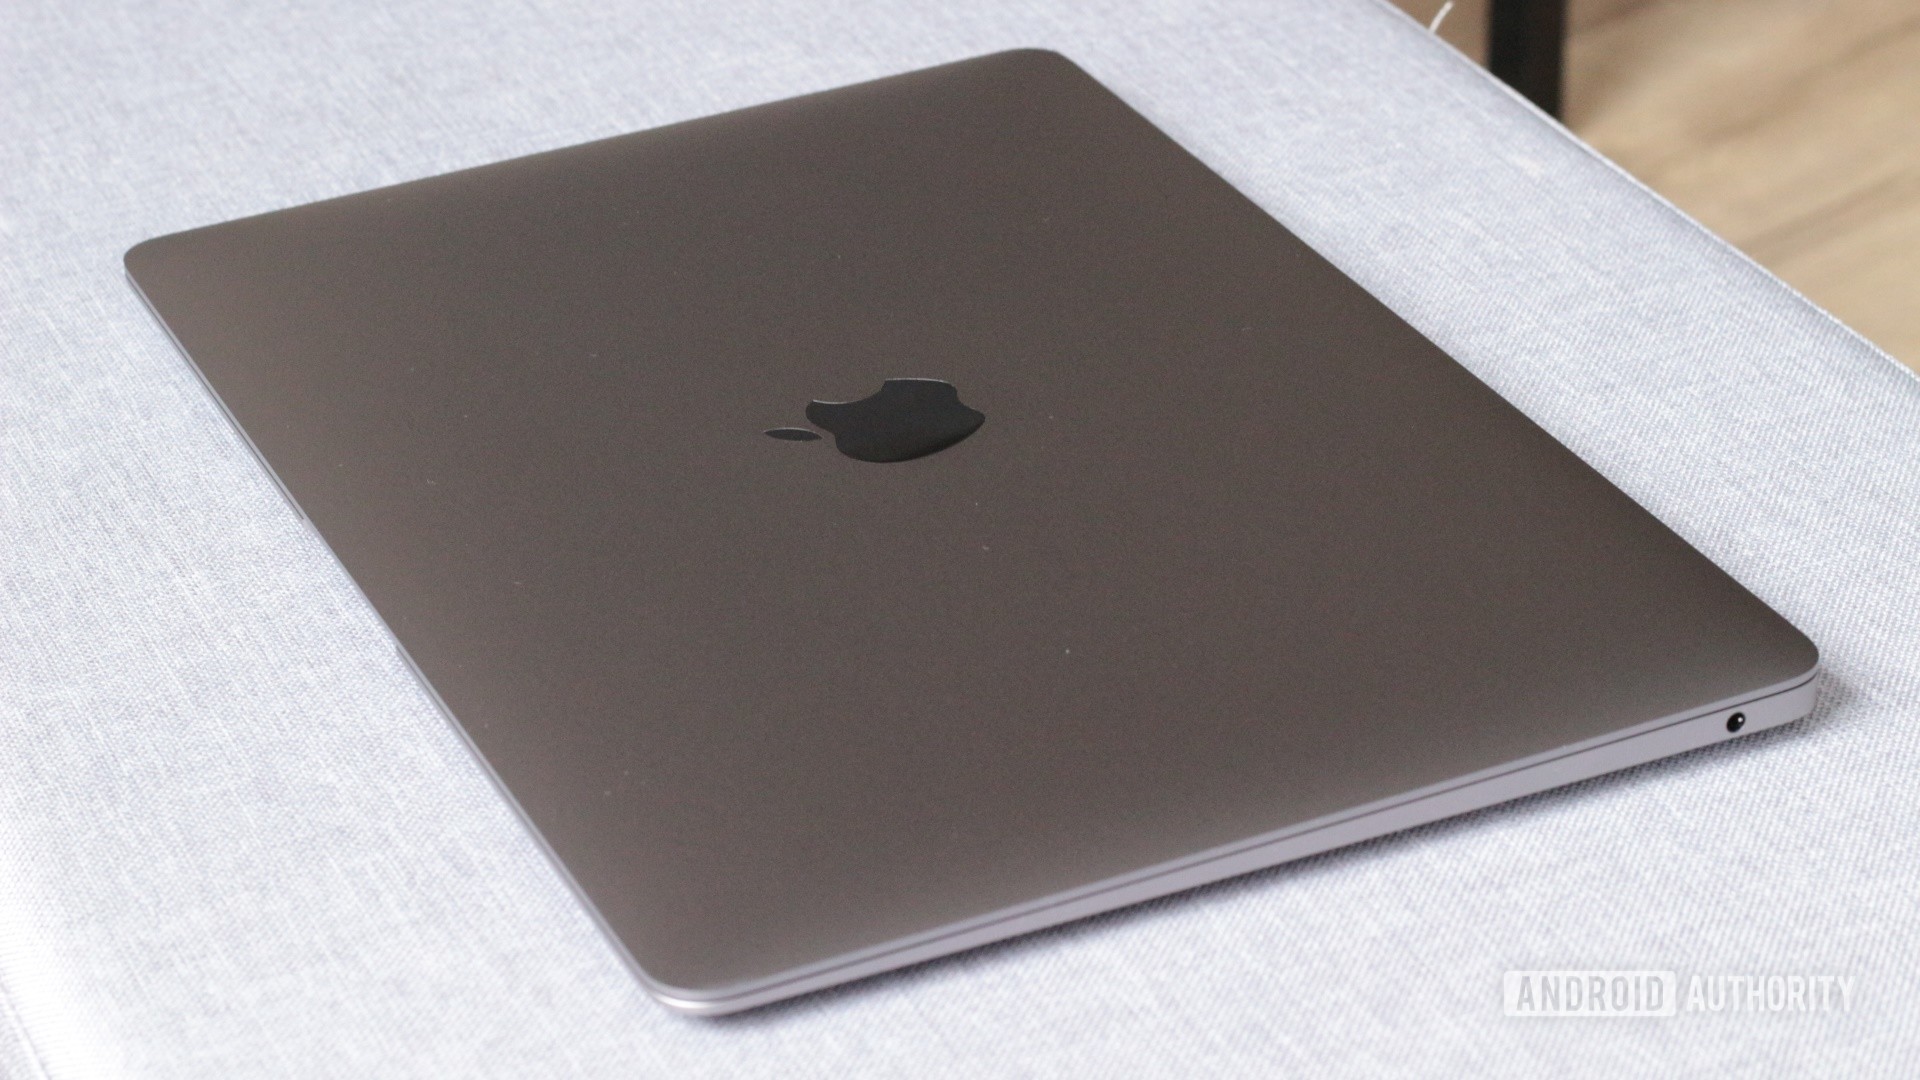 Apple MacBook Air M1 closed showing logo